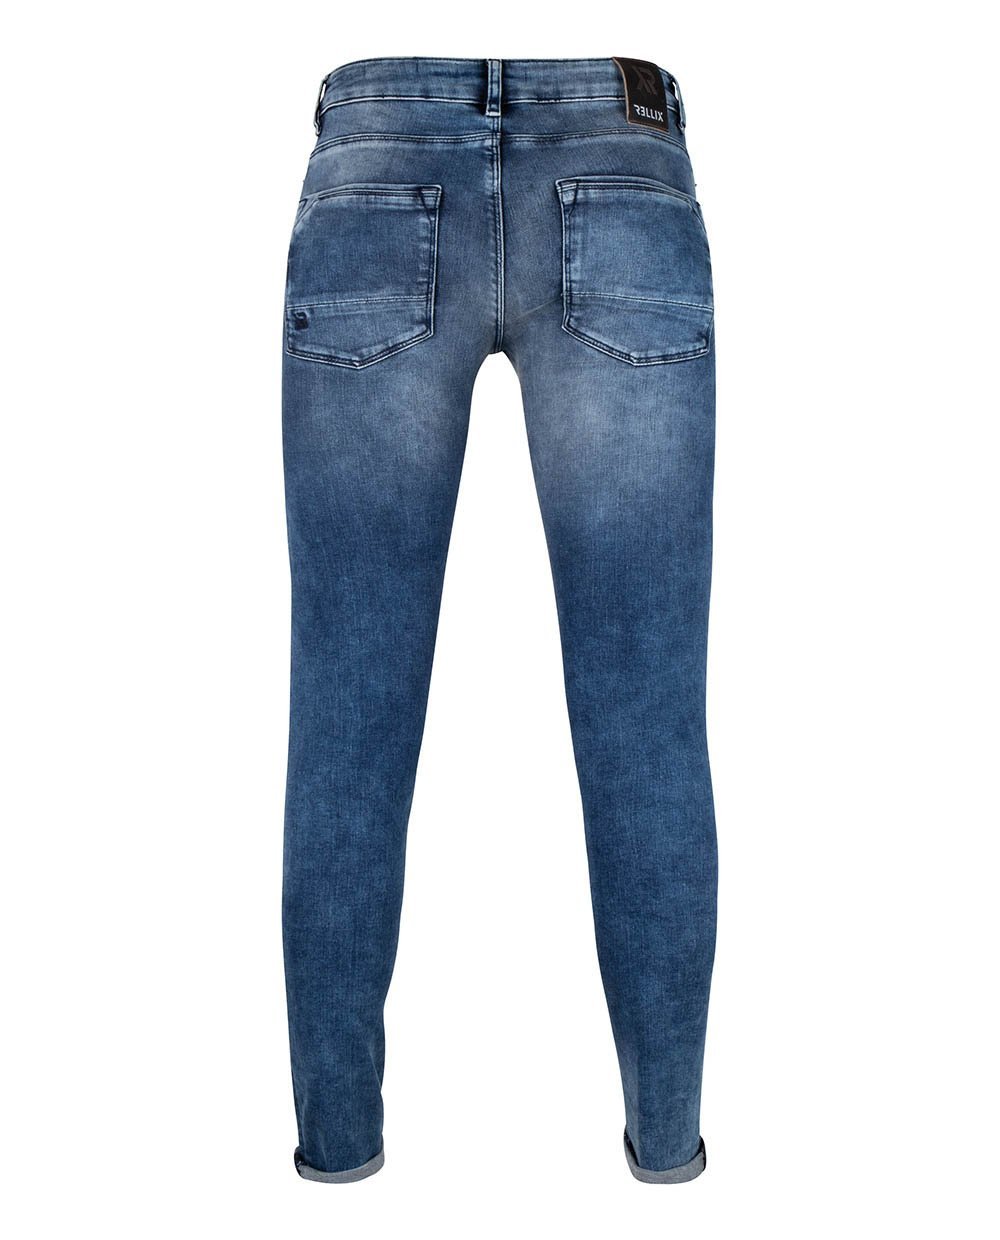 Jongens Jeans Xyan Skinny Used Medium Denim van Rellix in de kleur Used Medium Denim in maat 176.